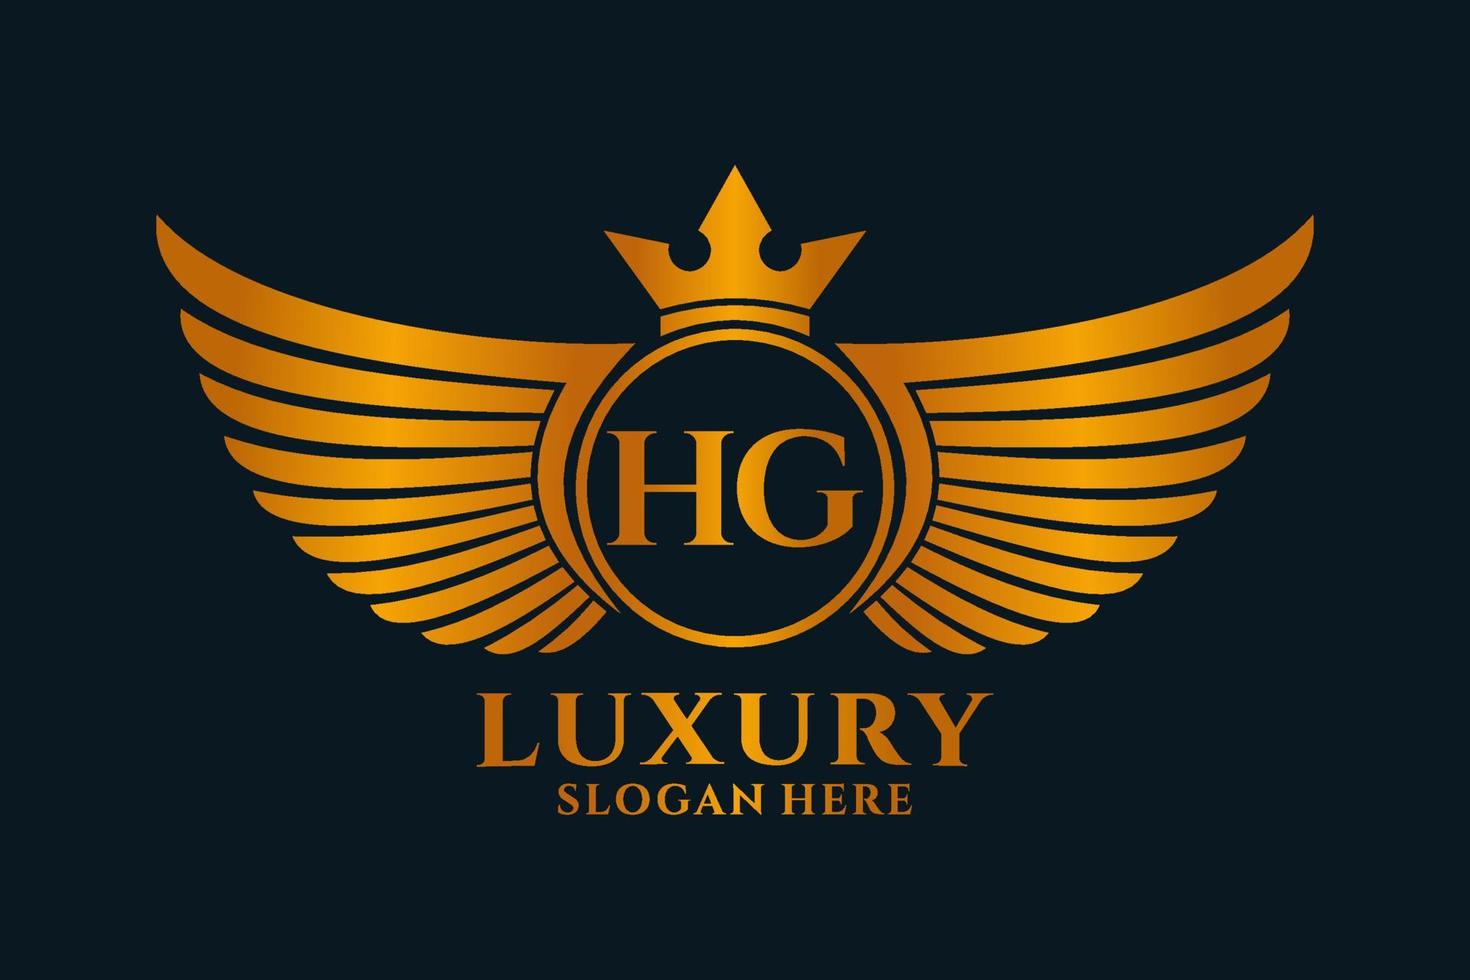 luxe Koninklijk vleugel brief hg kam goud kleur logo vector, zege logo, kam logo, vleugel logo, vector logo sjabloon.